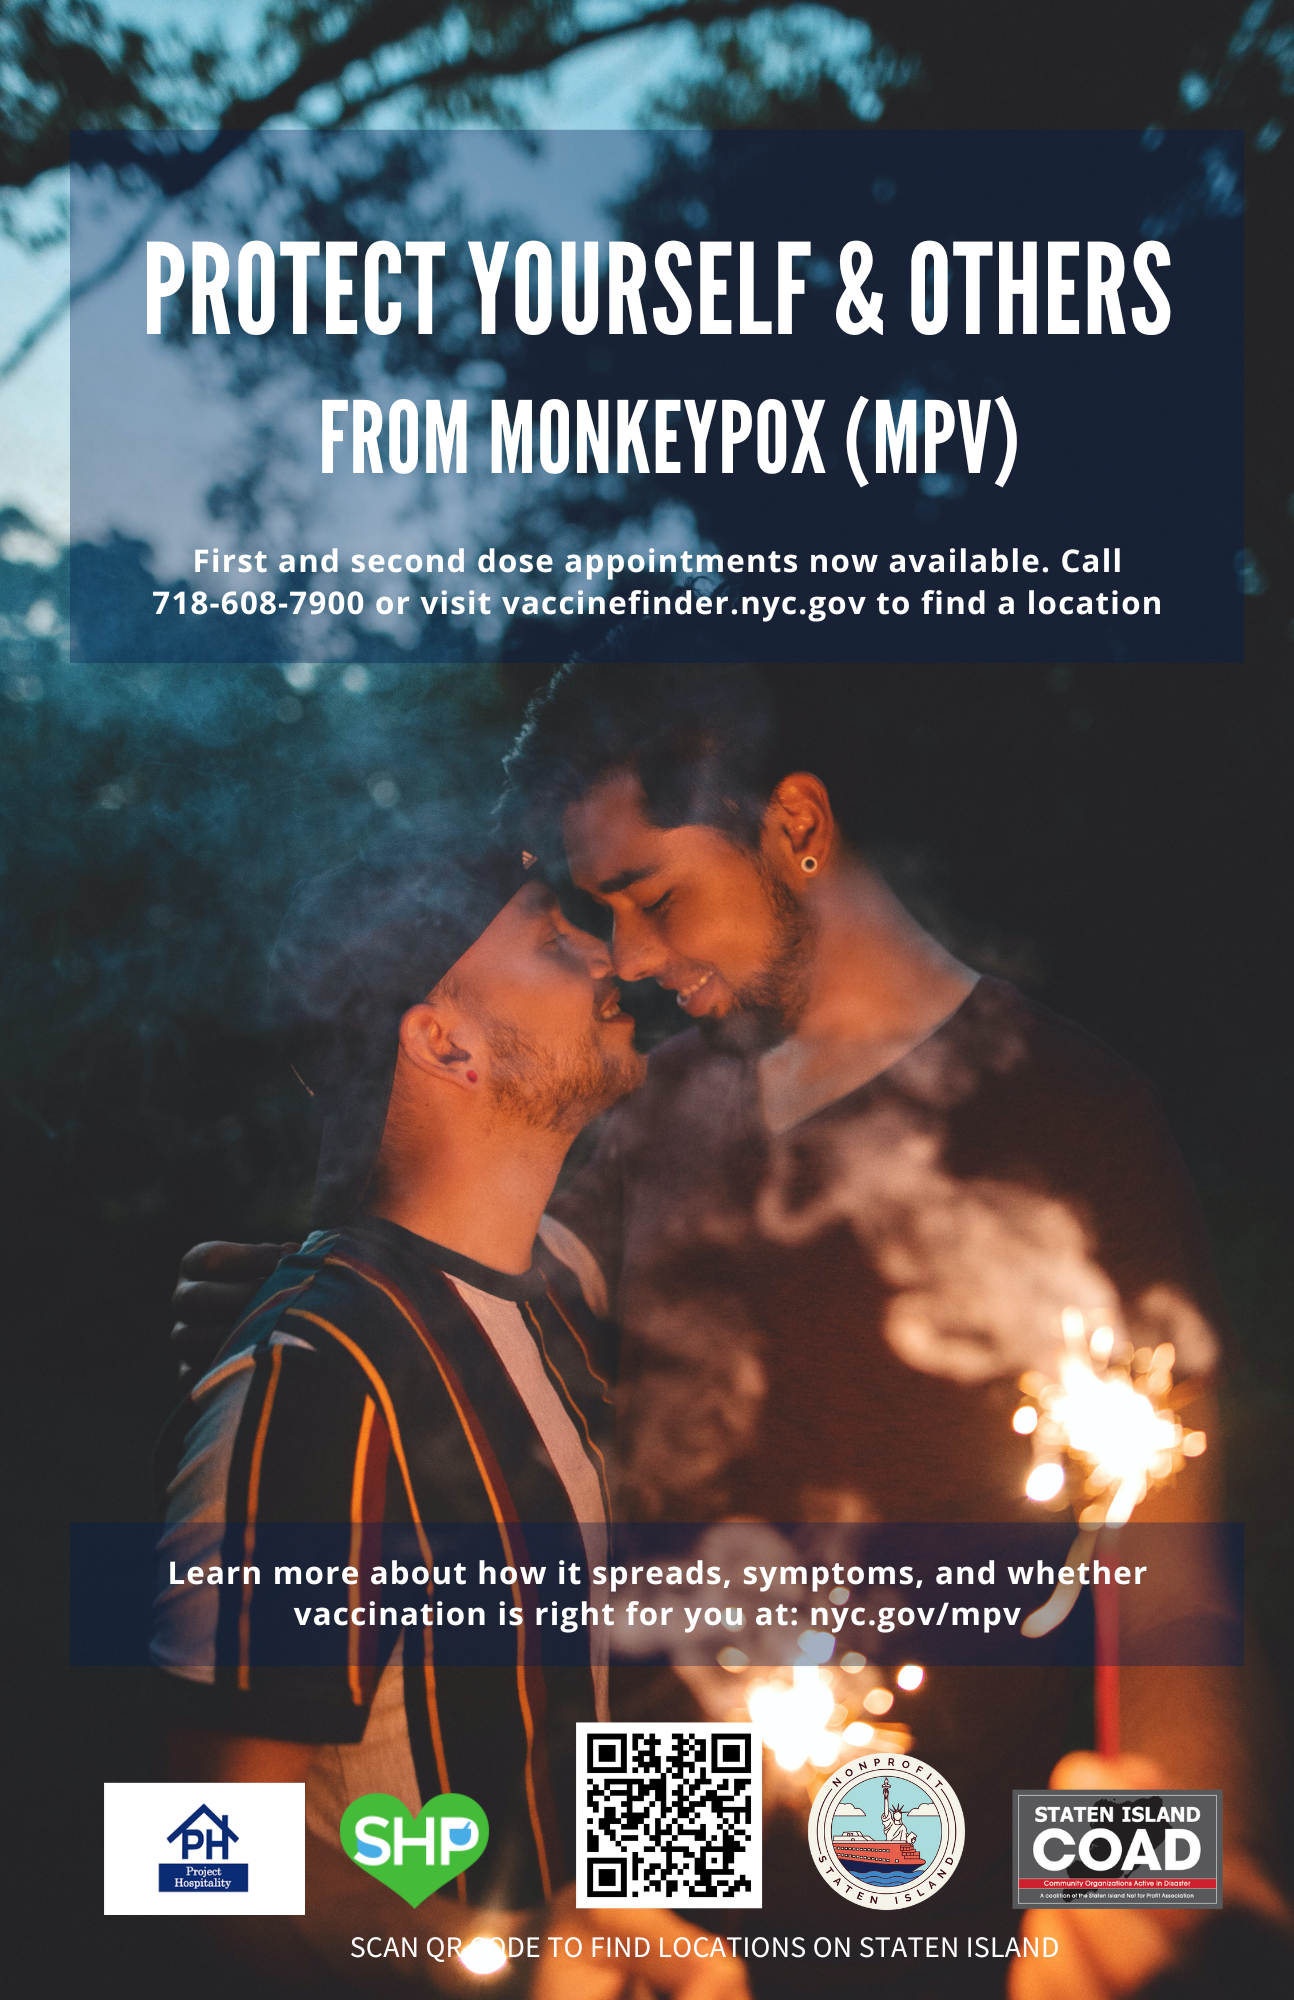 Monkeypox Awareness and Prevention Partnership (MAPP)